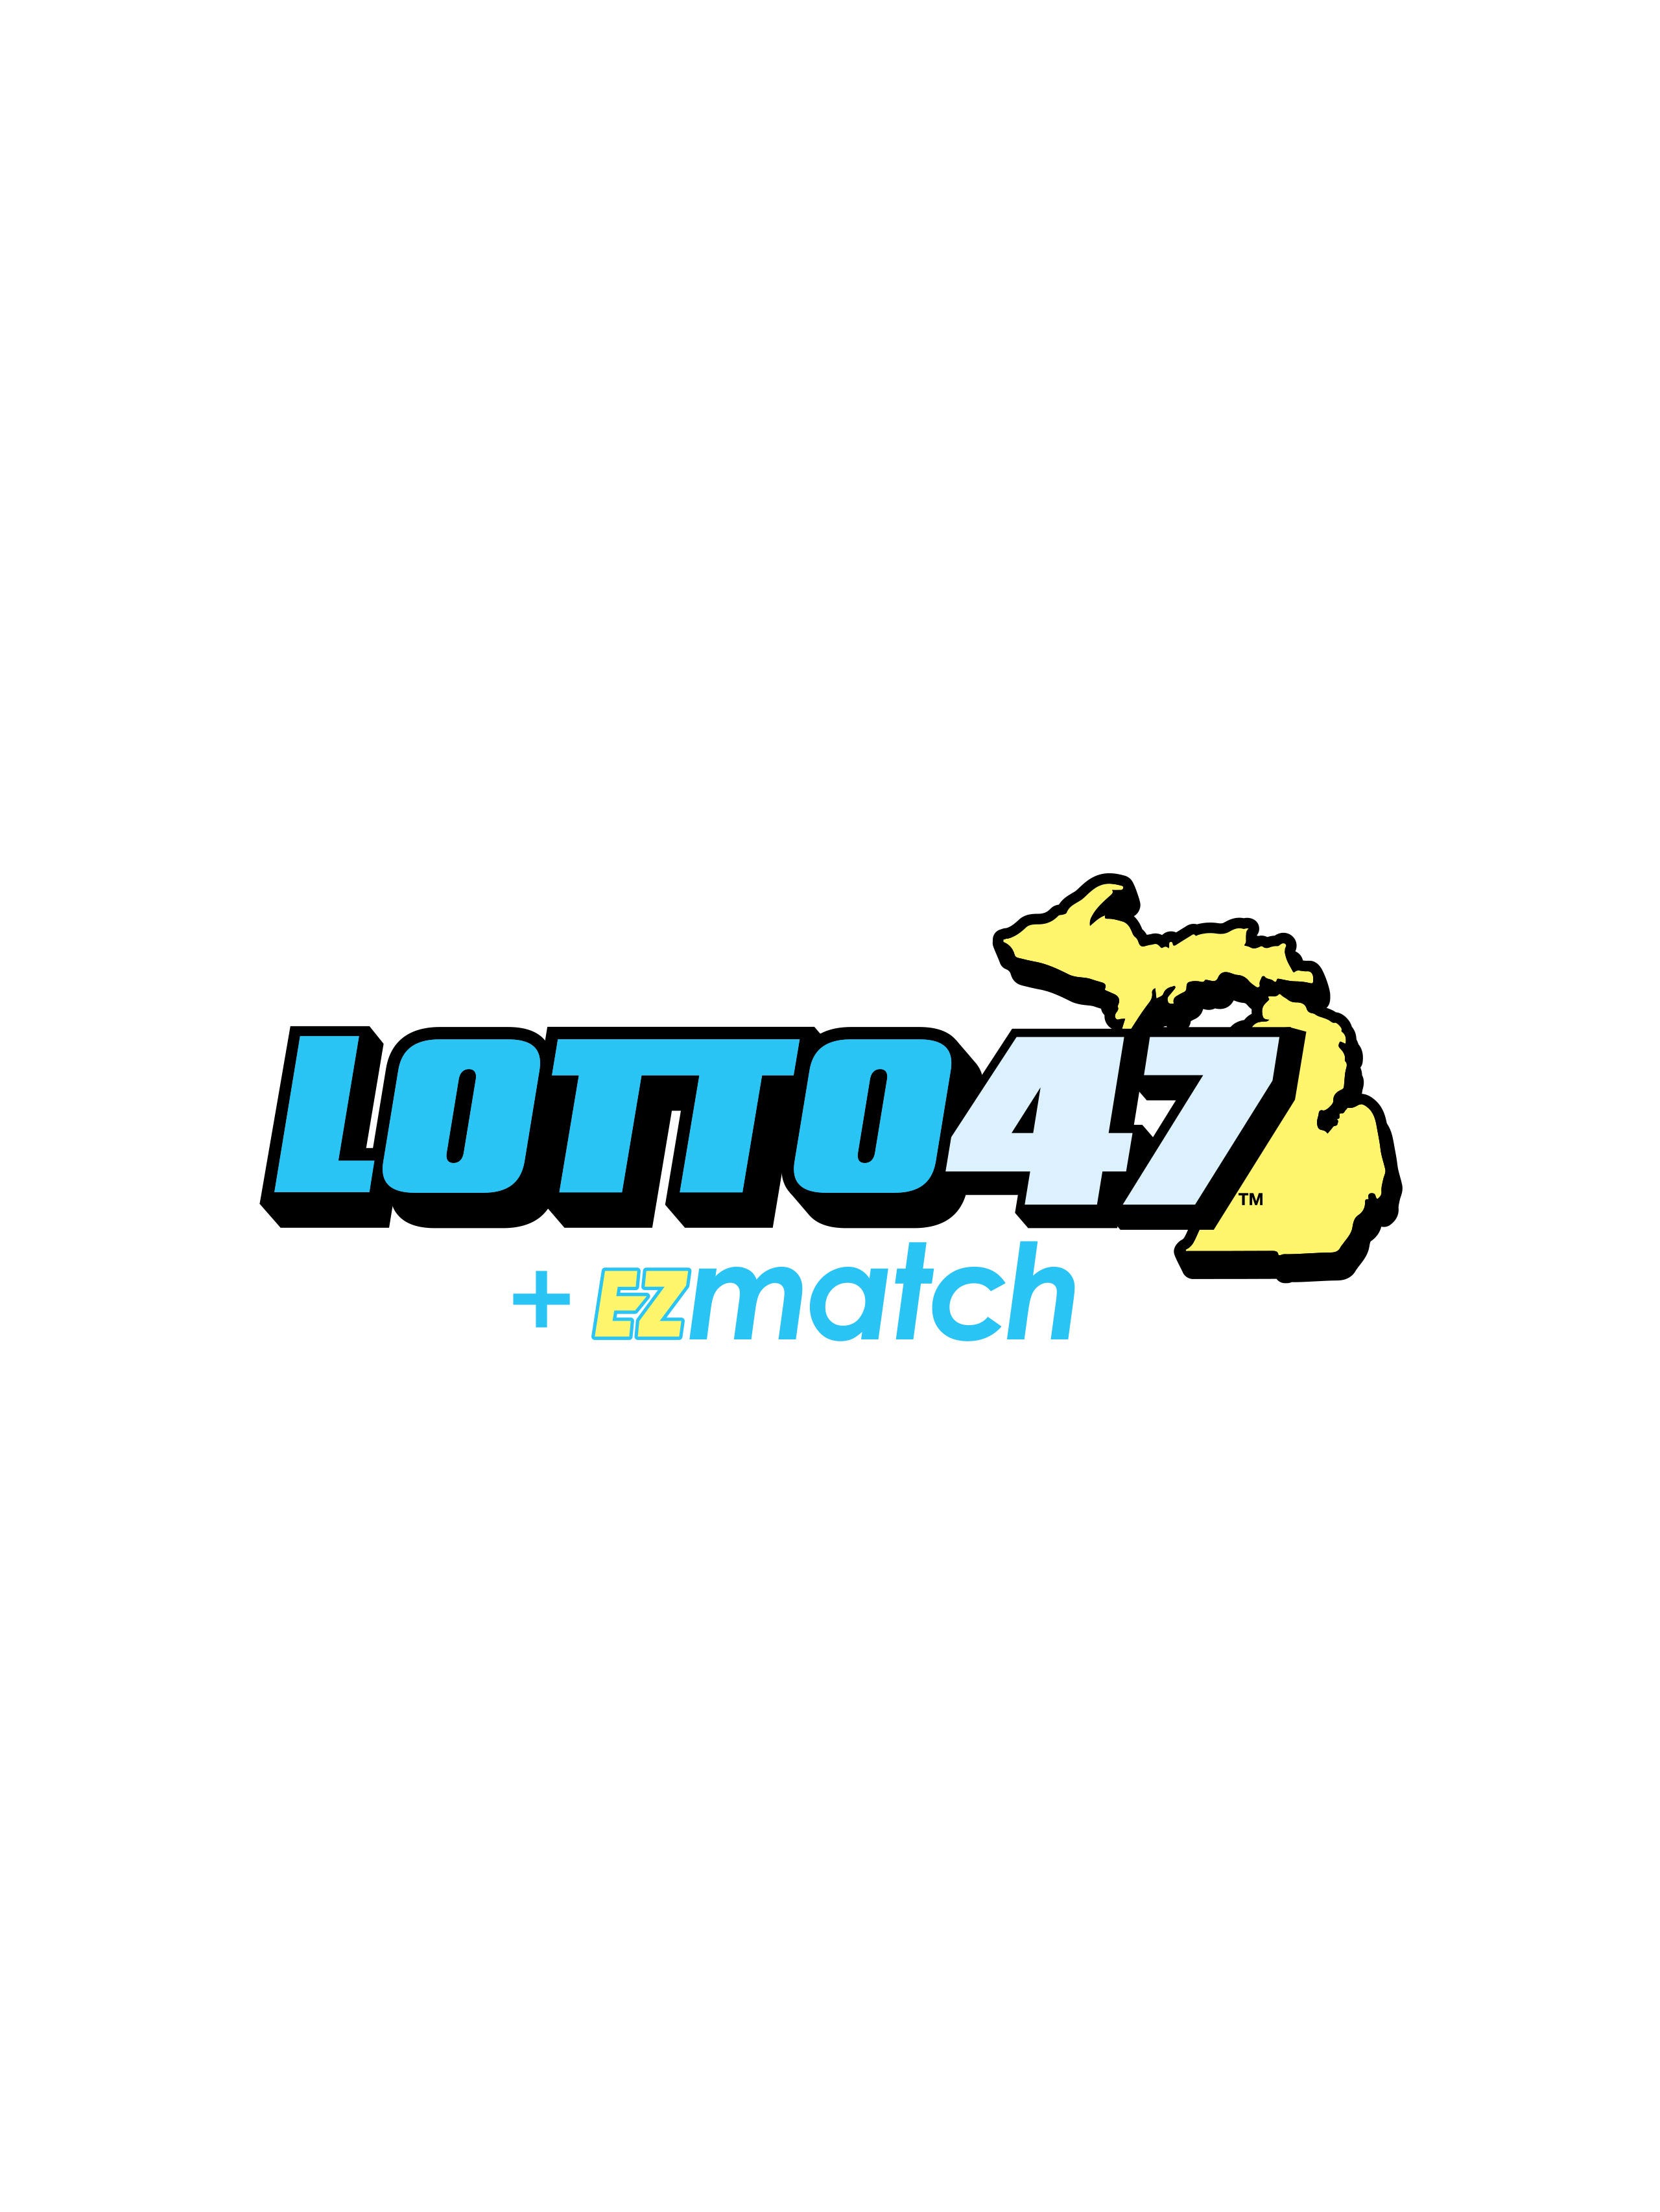 lotto 47 past winning numbers